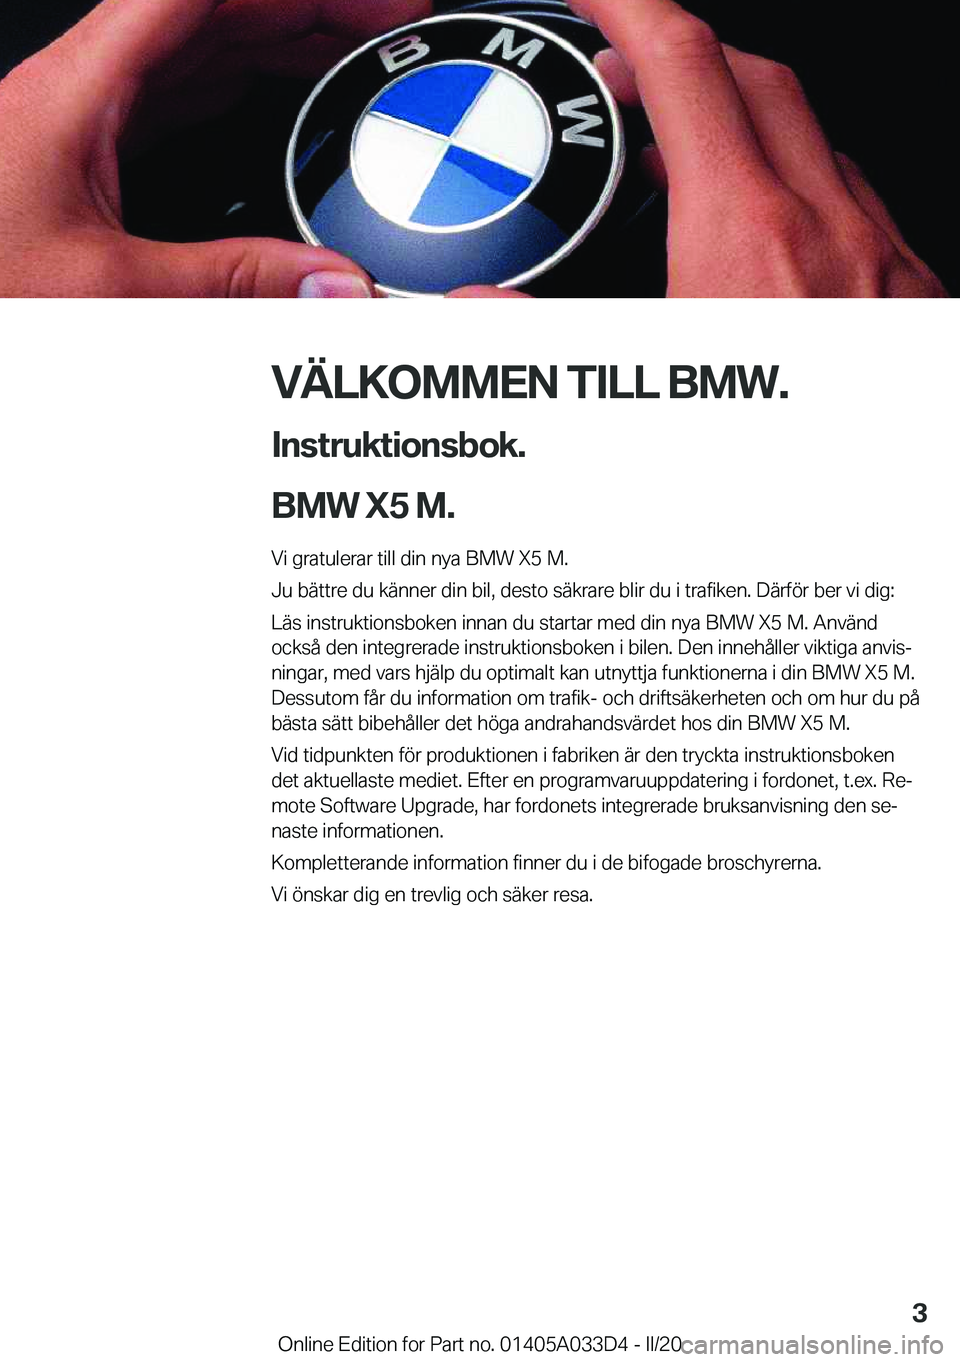 BMW X5 M 2020  InstruktionsbÖcker (in Swedish) �V�Ä�L�K�O�M�M�E�N��T�I�L�L��B�M�W�.�I�n�s�t�r�u�k�t�i�o�n�s�b�o�k�.
�B�M�W��X�5��M�.
�V�i��g�r�a�t�u�l�e�r�a�r��t�i�l�l��d�i�n��n�y�a��B�M�W��X�5��M�.
�J�u��b�ä�t�t�r�e��d�u��k�ä�n�n